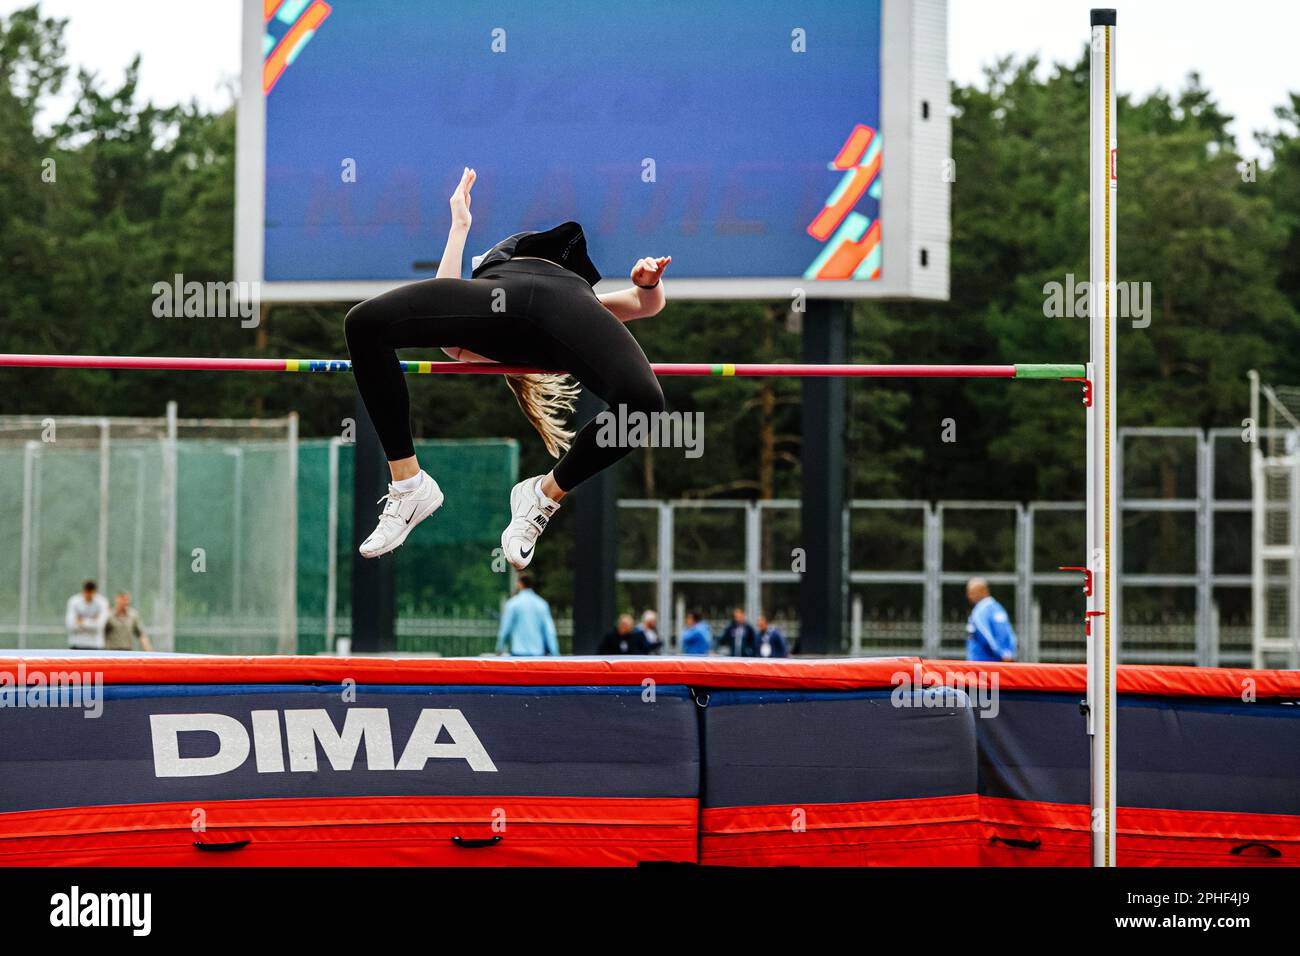 female athlete high jump method fosbury flop, high jump landing mat Dima sport, editorial photo Stock Photo